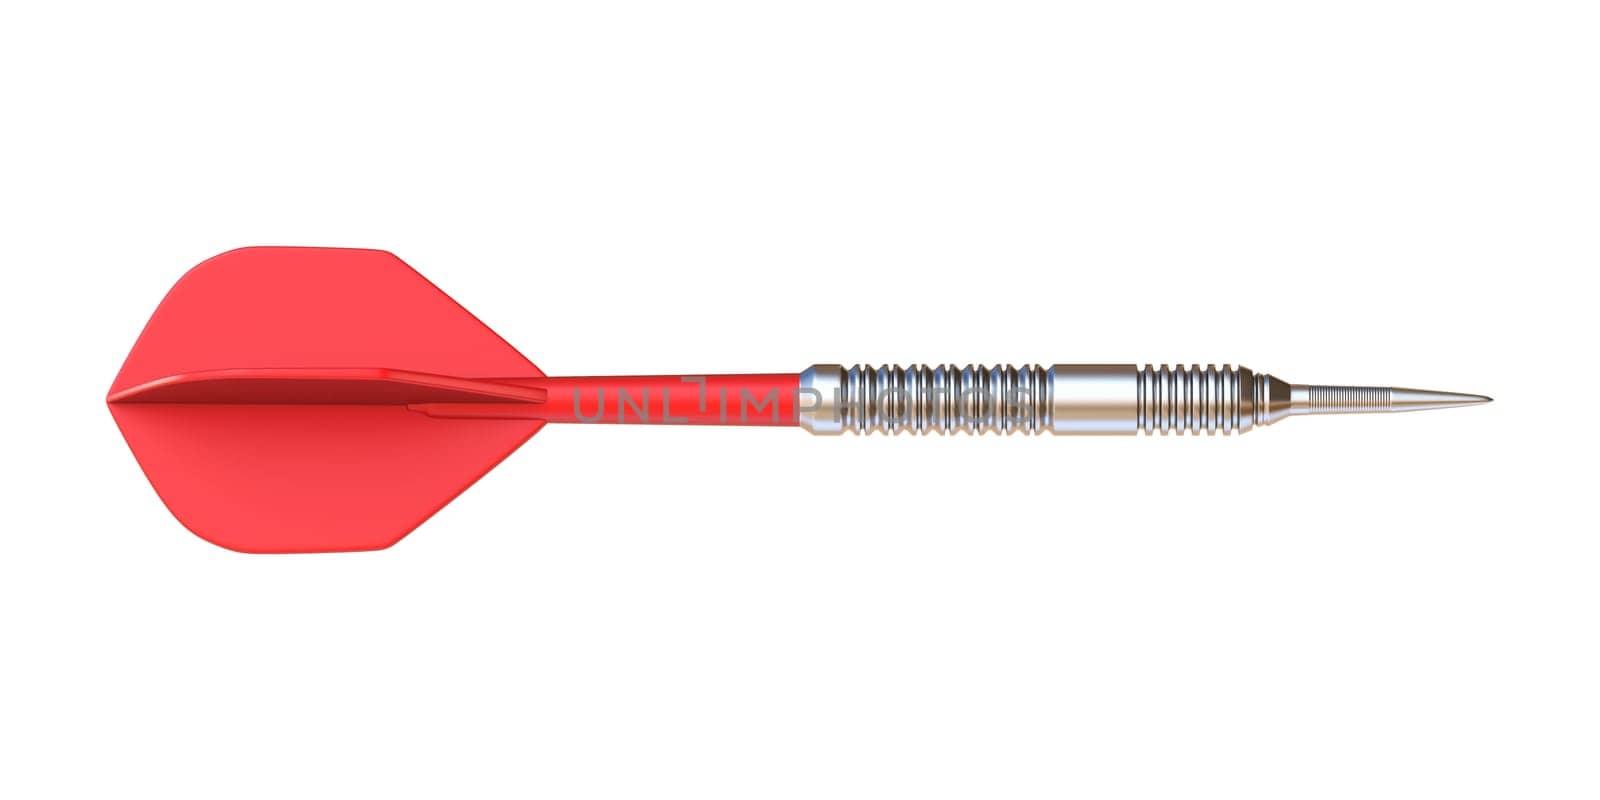 Single red dart 3D by djmilic